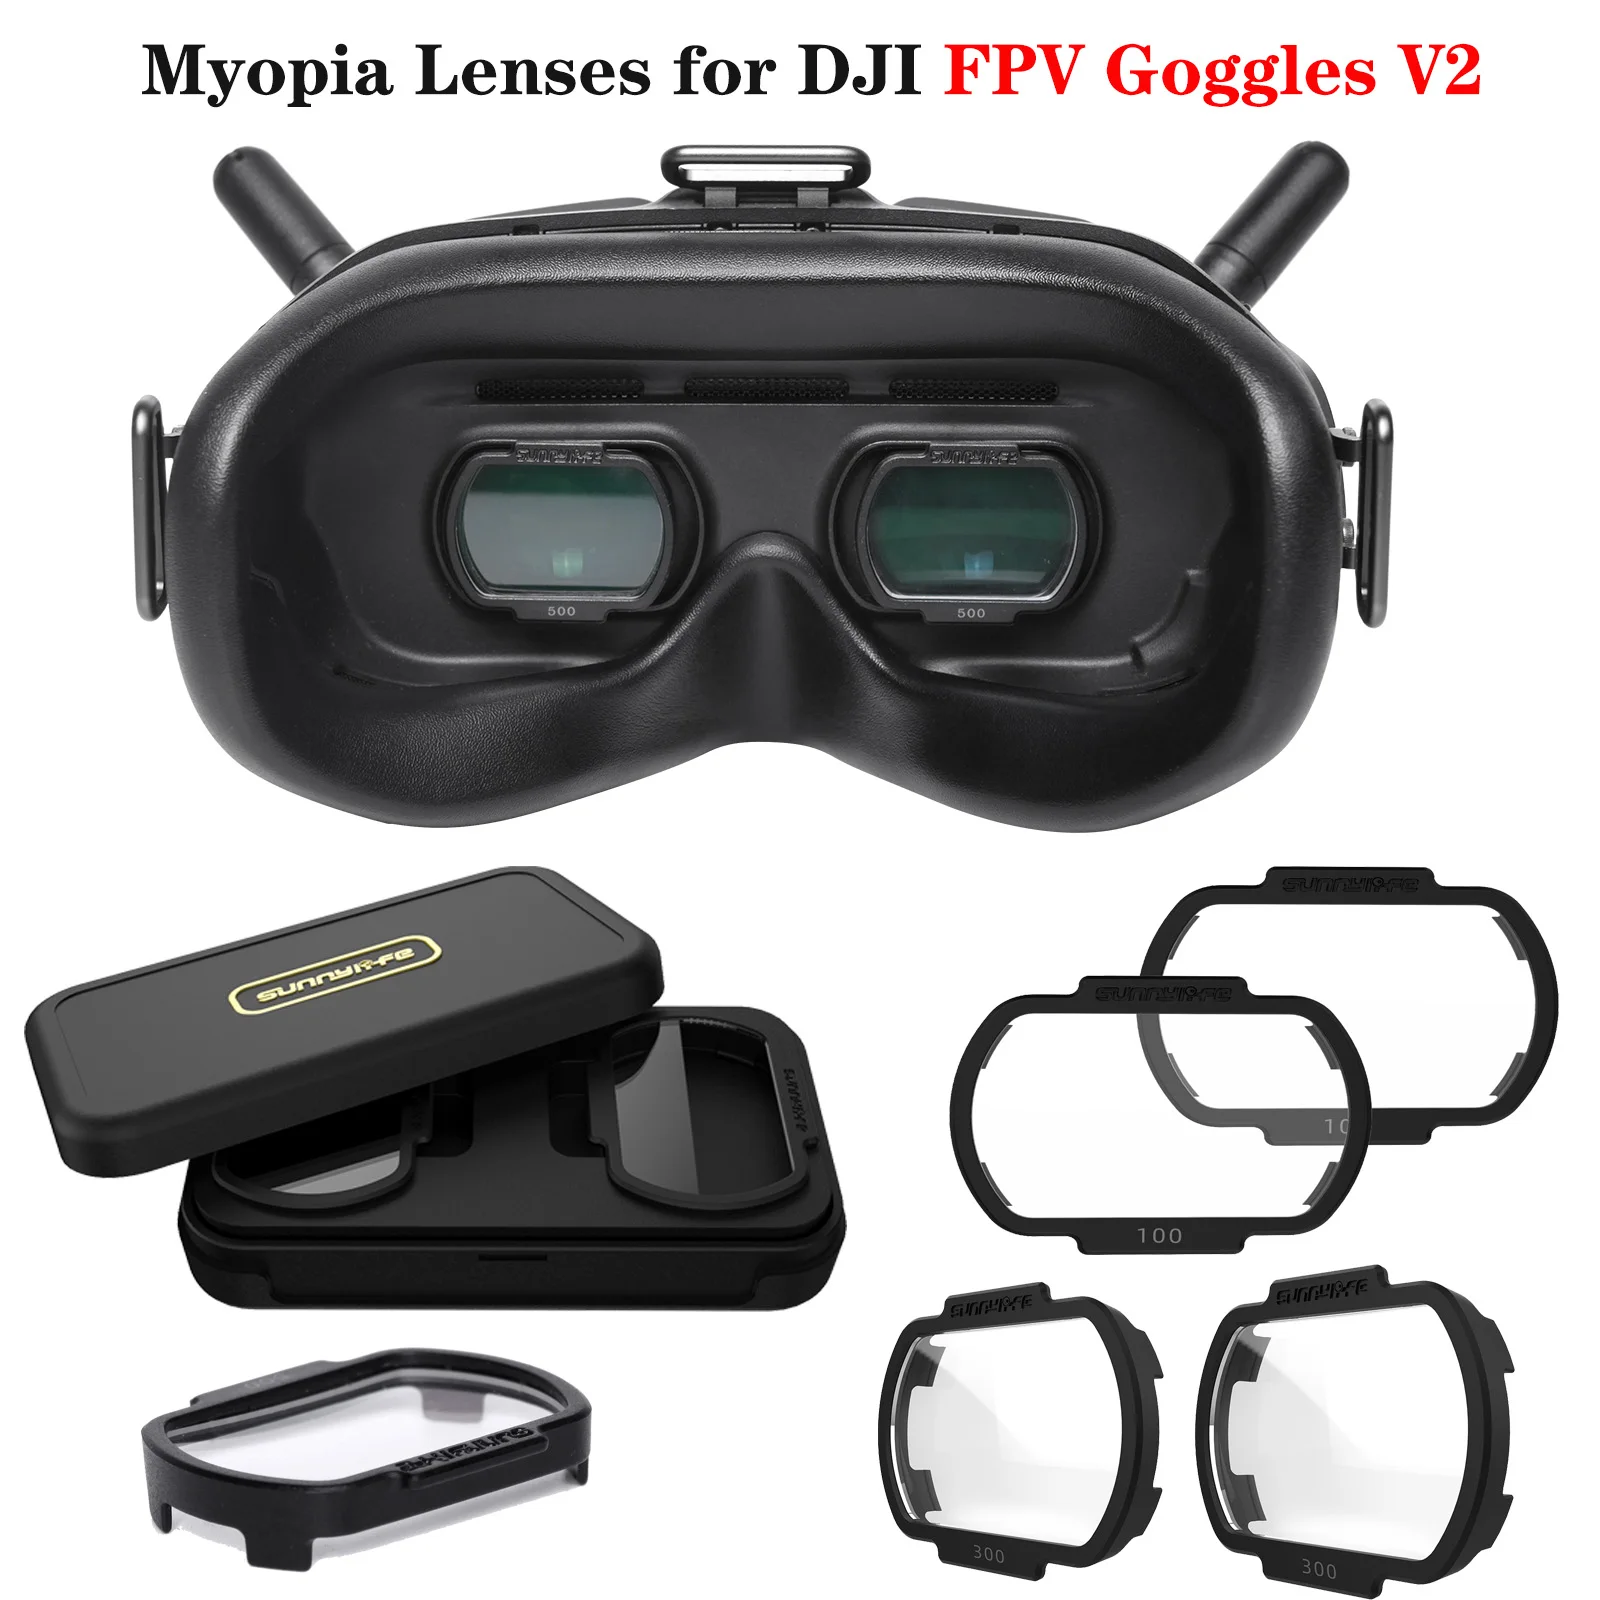 

1Pair Myopia Lenses for DJI FPV Goggles V2 Corrective Lenses HD Aspherical Resin Lenses Nearsighted Glasses Accessories